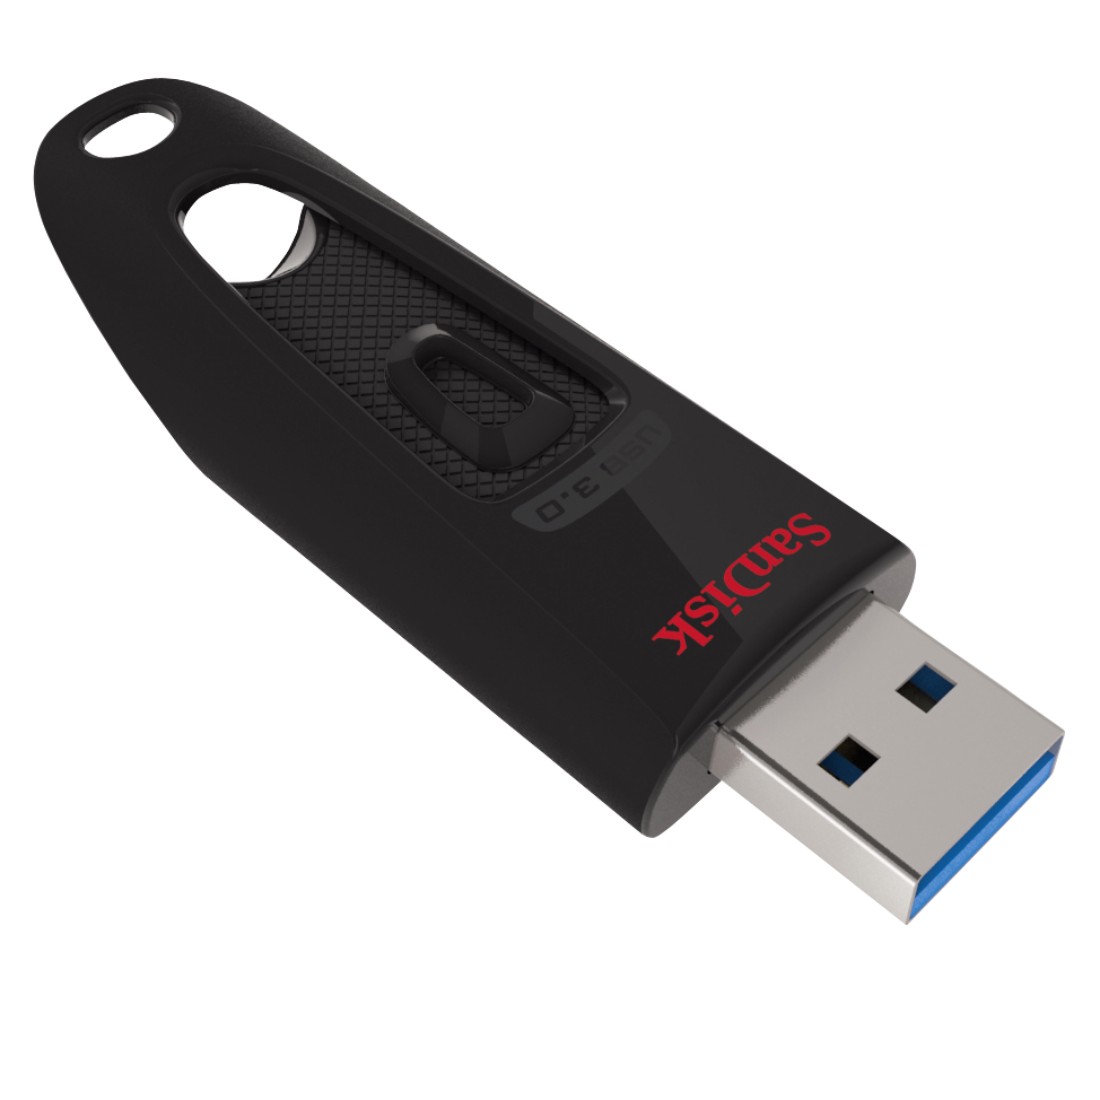 USB kľúč SanDisk Ultra, 64GB, USB 3.0 - rýchlosť 100MB/s (SDCZ48-064G-U46)